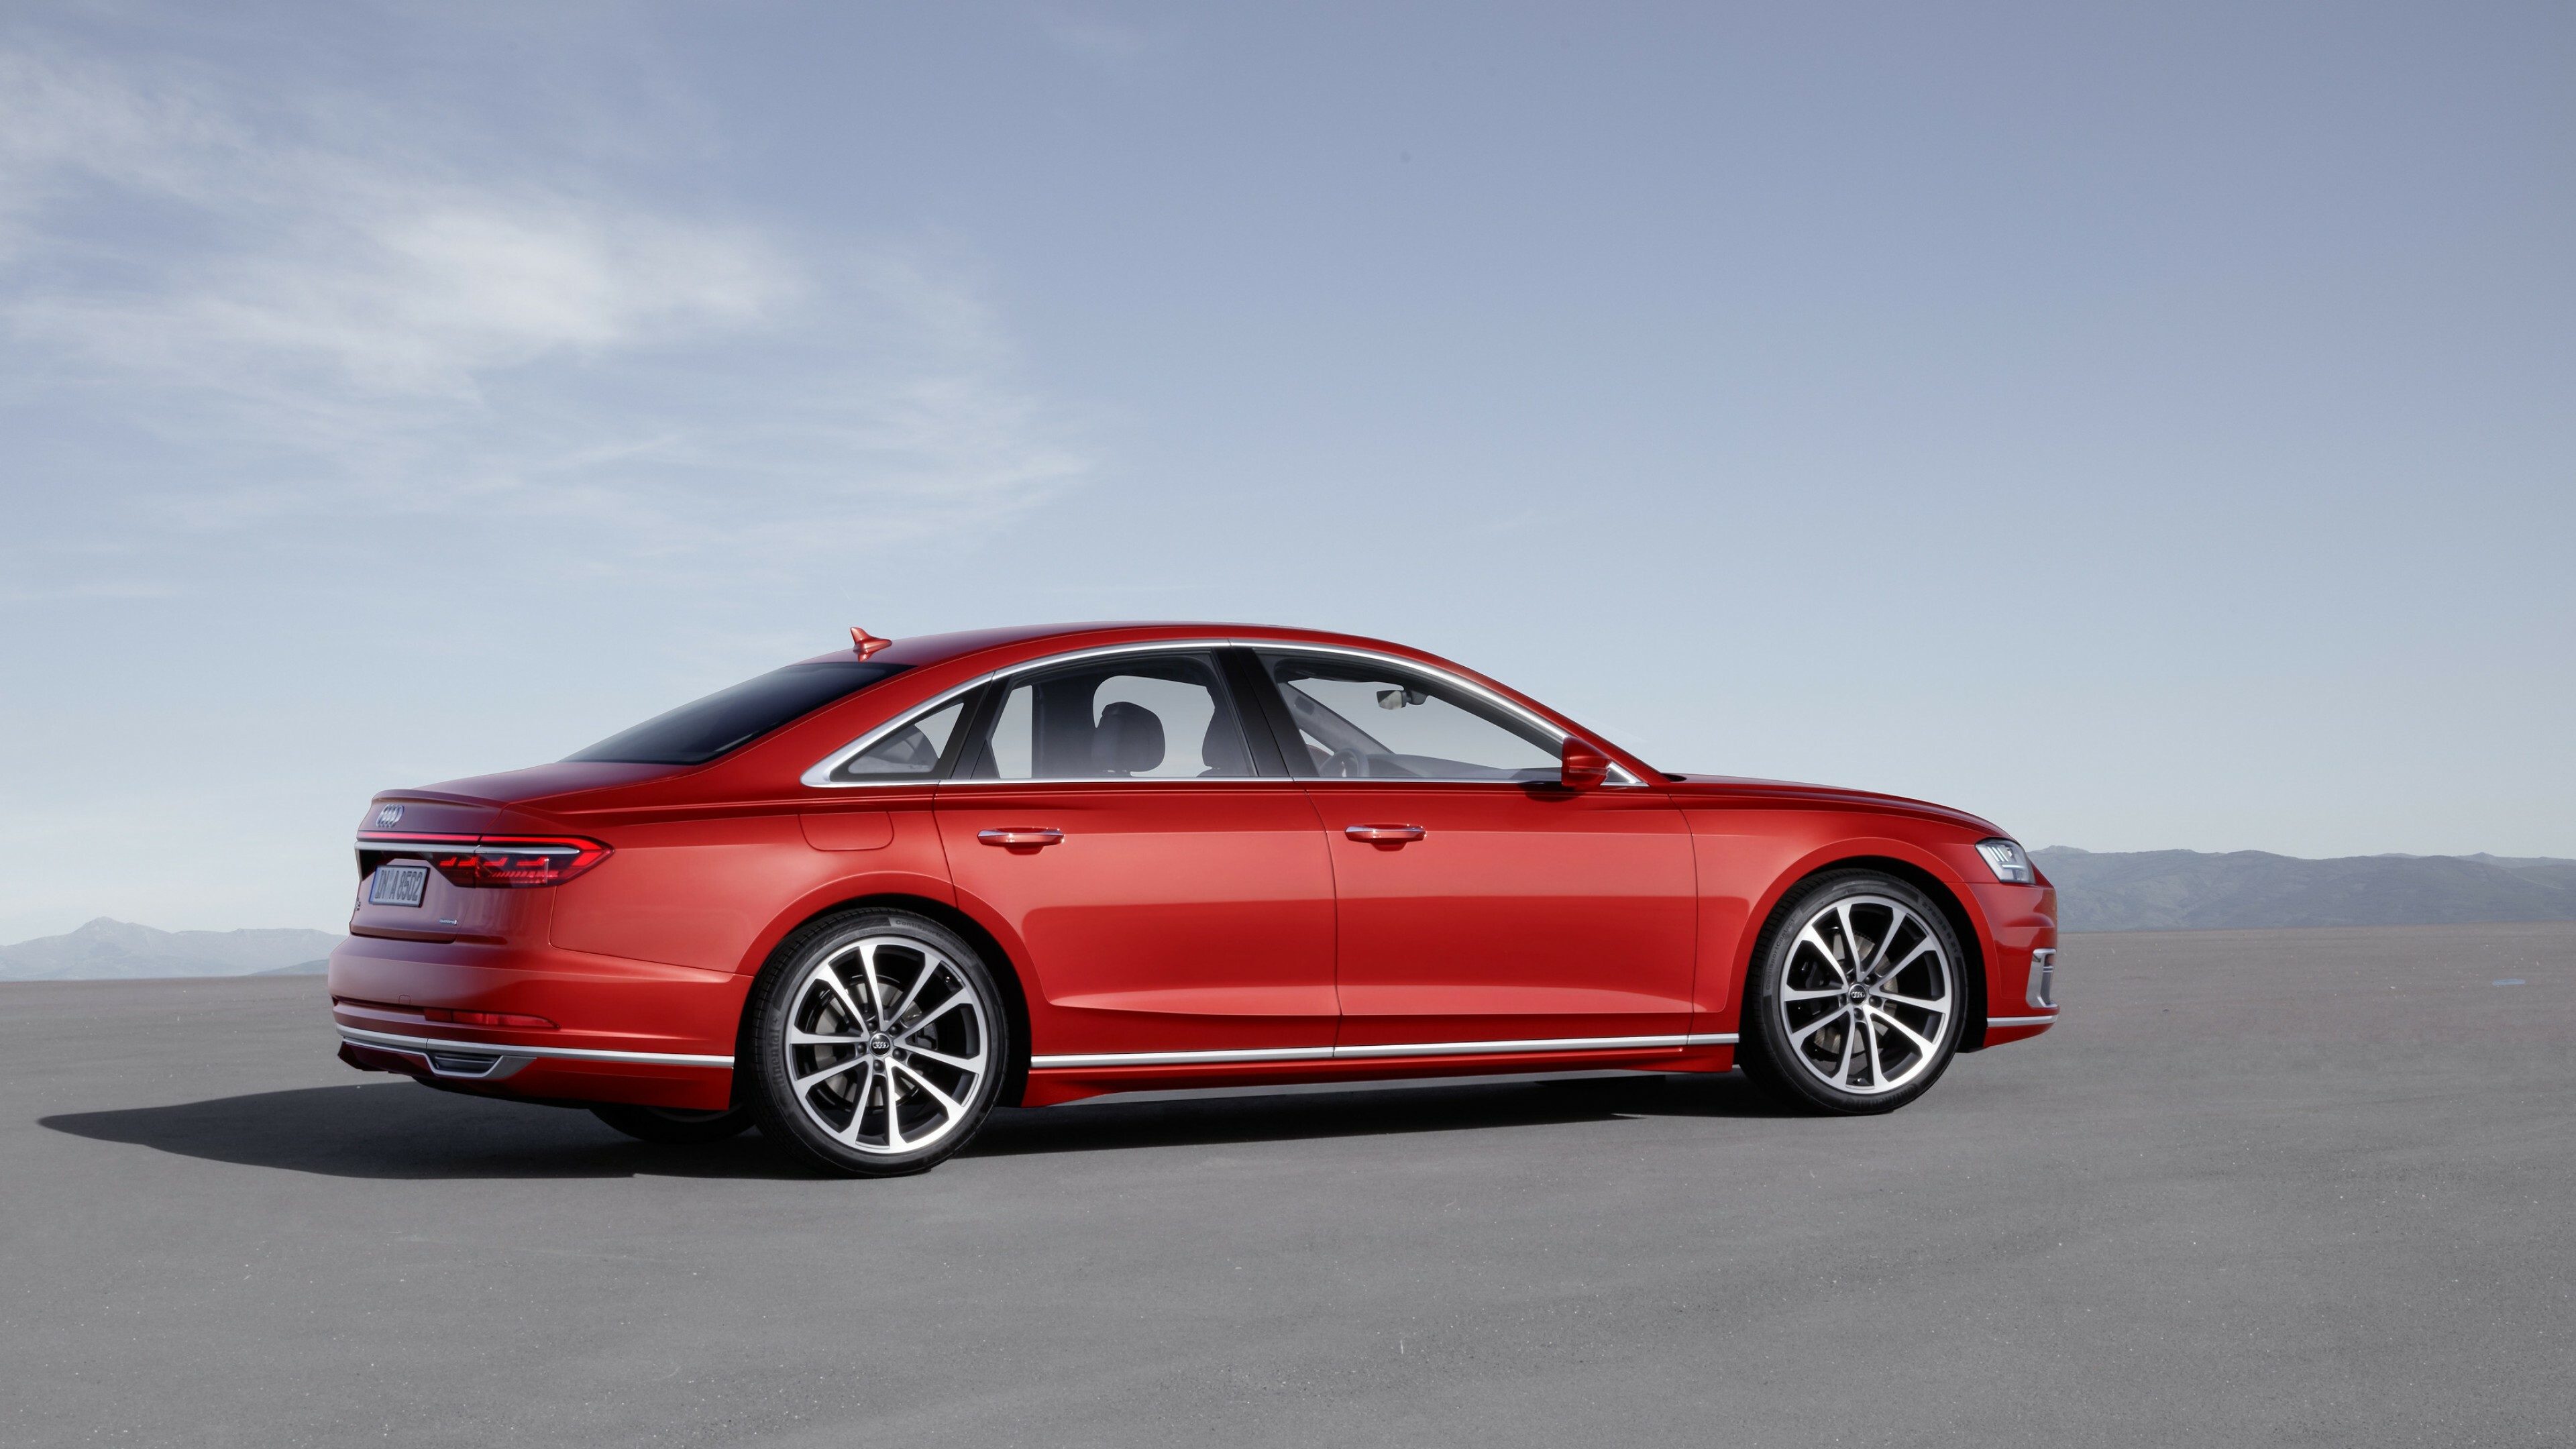 Audi A8: A 4 seater sedan, Turbocharged V-6 rated at 335 horsepower. 3840x2160 4K Wallpaper.